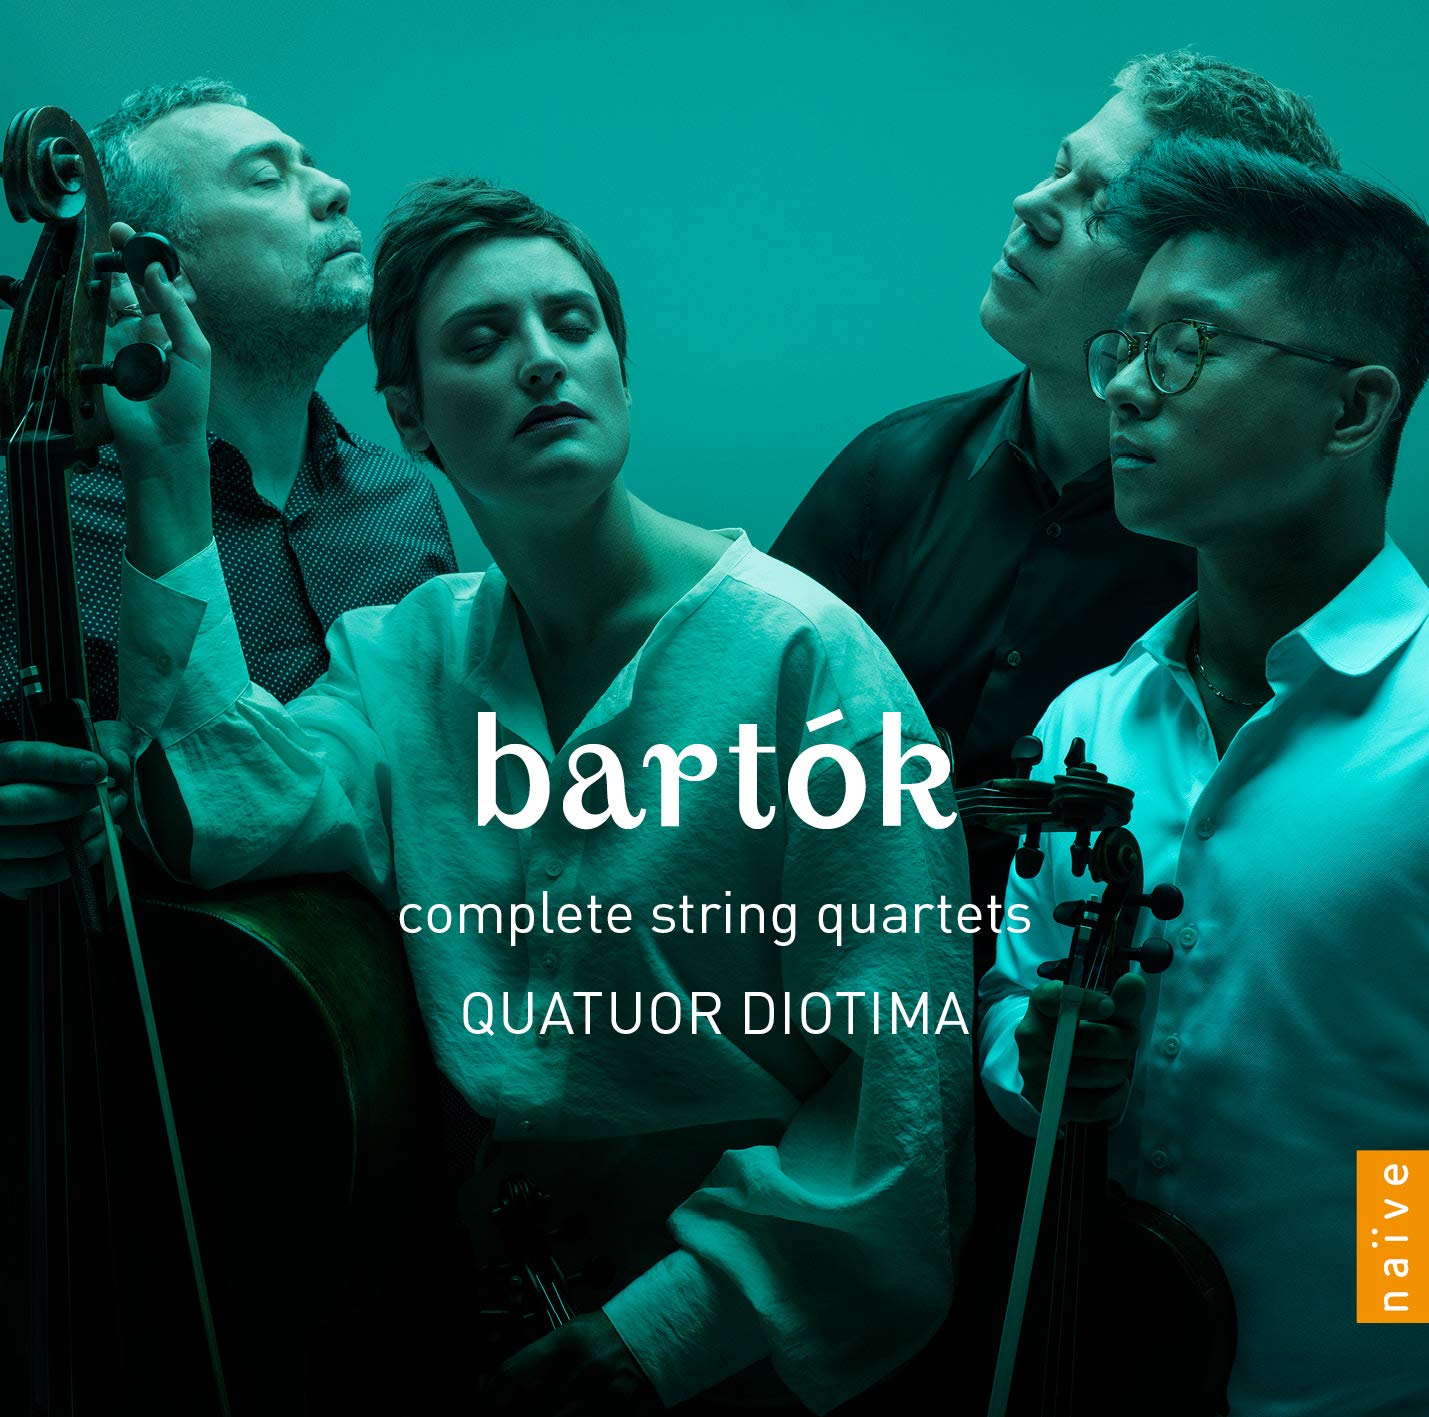 Quatuor Diotima's Bartok